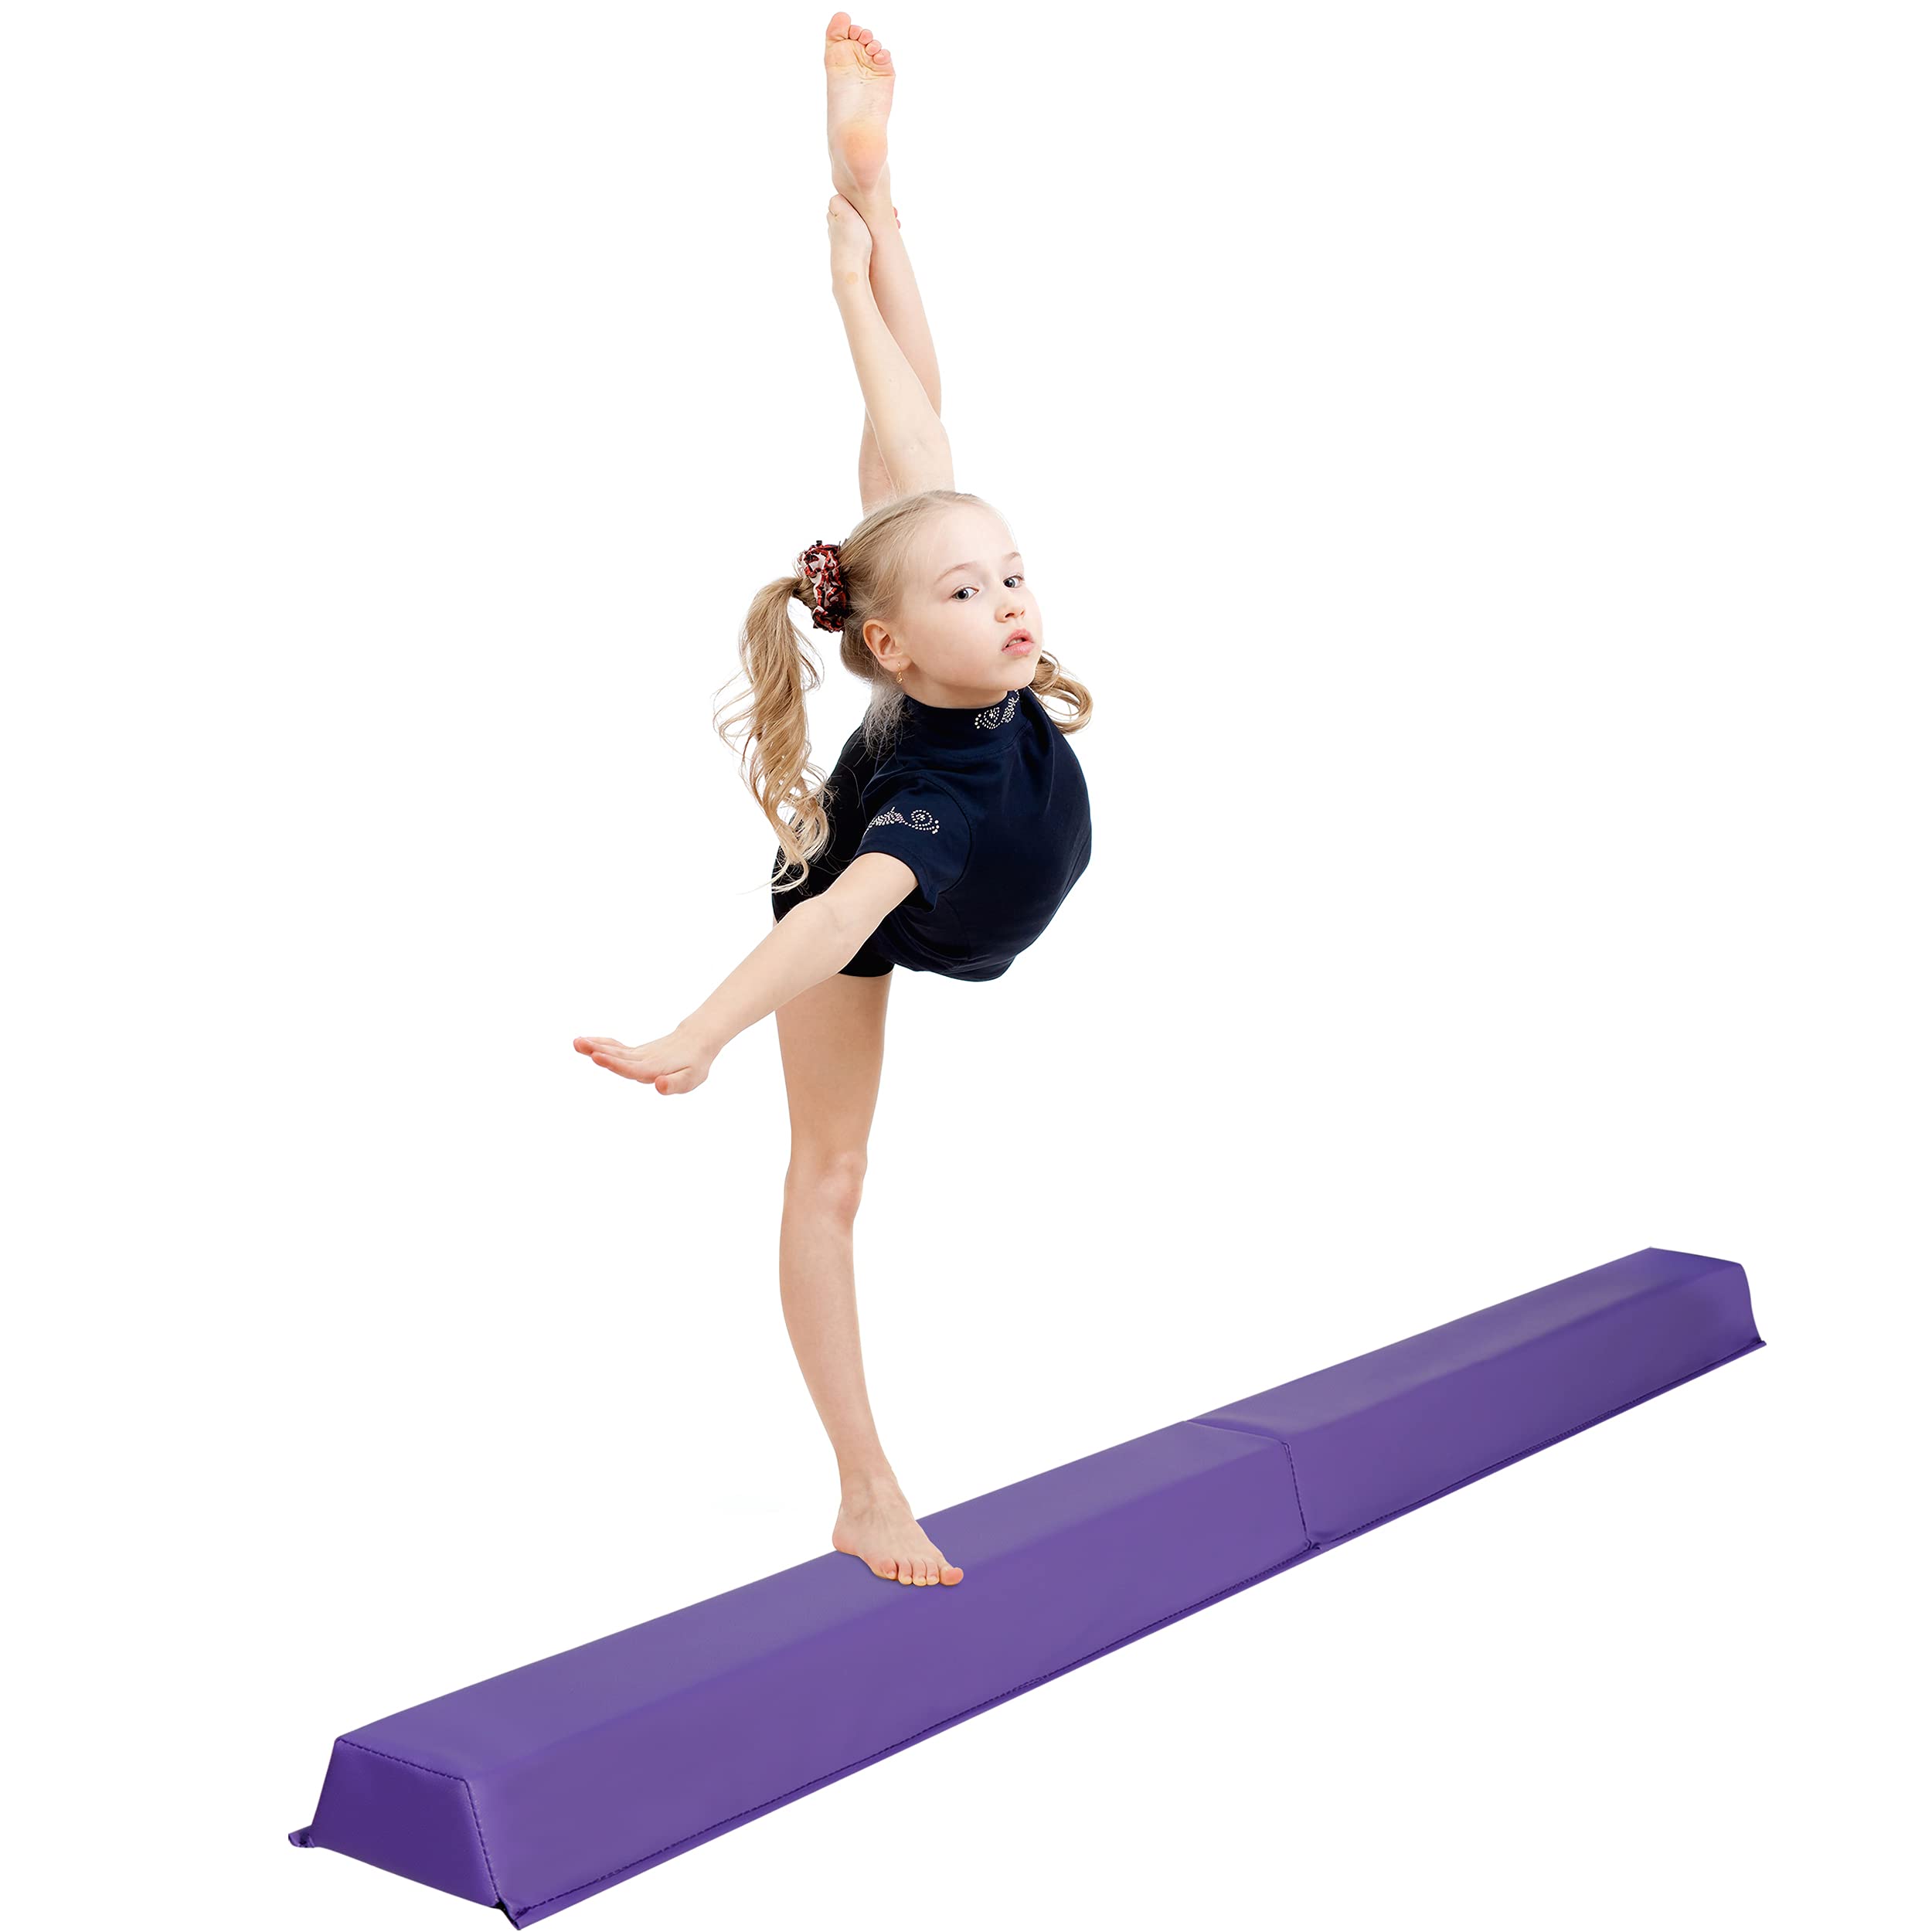 Oteymart 6FT Balance Beam Folding Gymnastics Beam Extra Firm Foam Anti-Slip Bottom Equipment for Floor Home Training, Kids, Adults